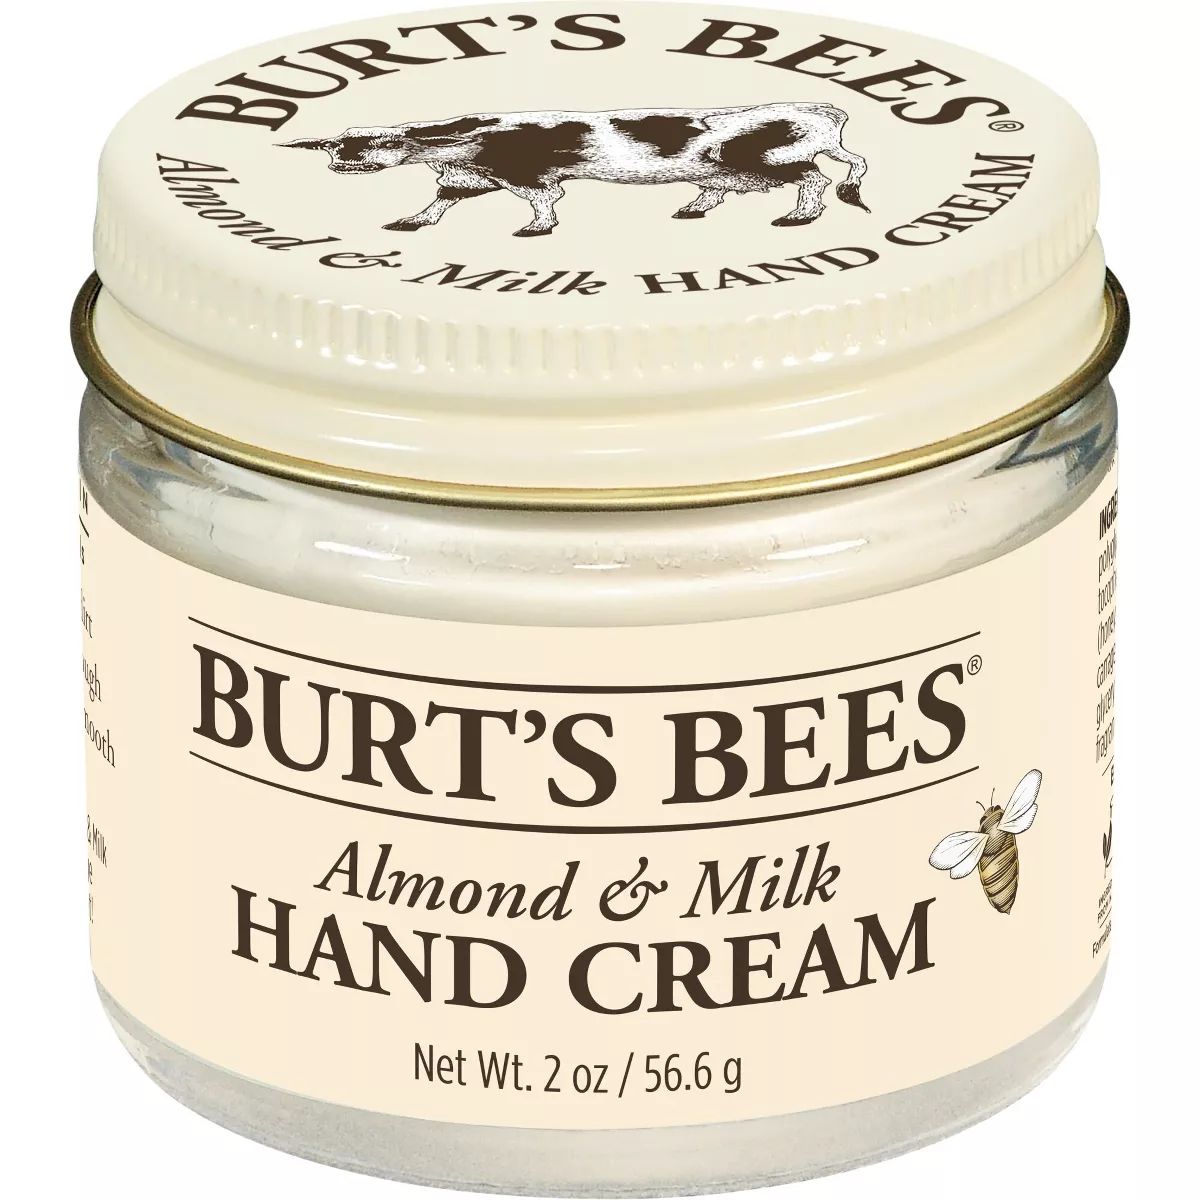 Burt's Bees Almond & Milk Hand Cream - 2oz | Target